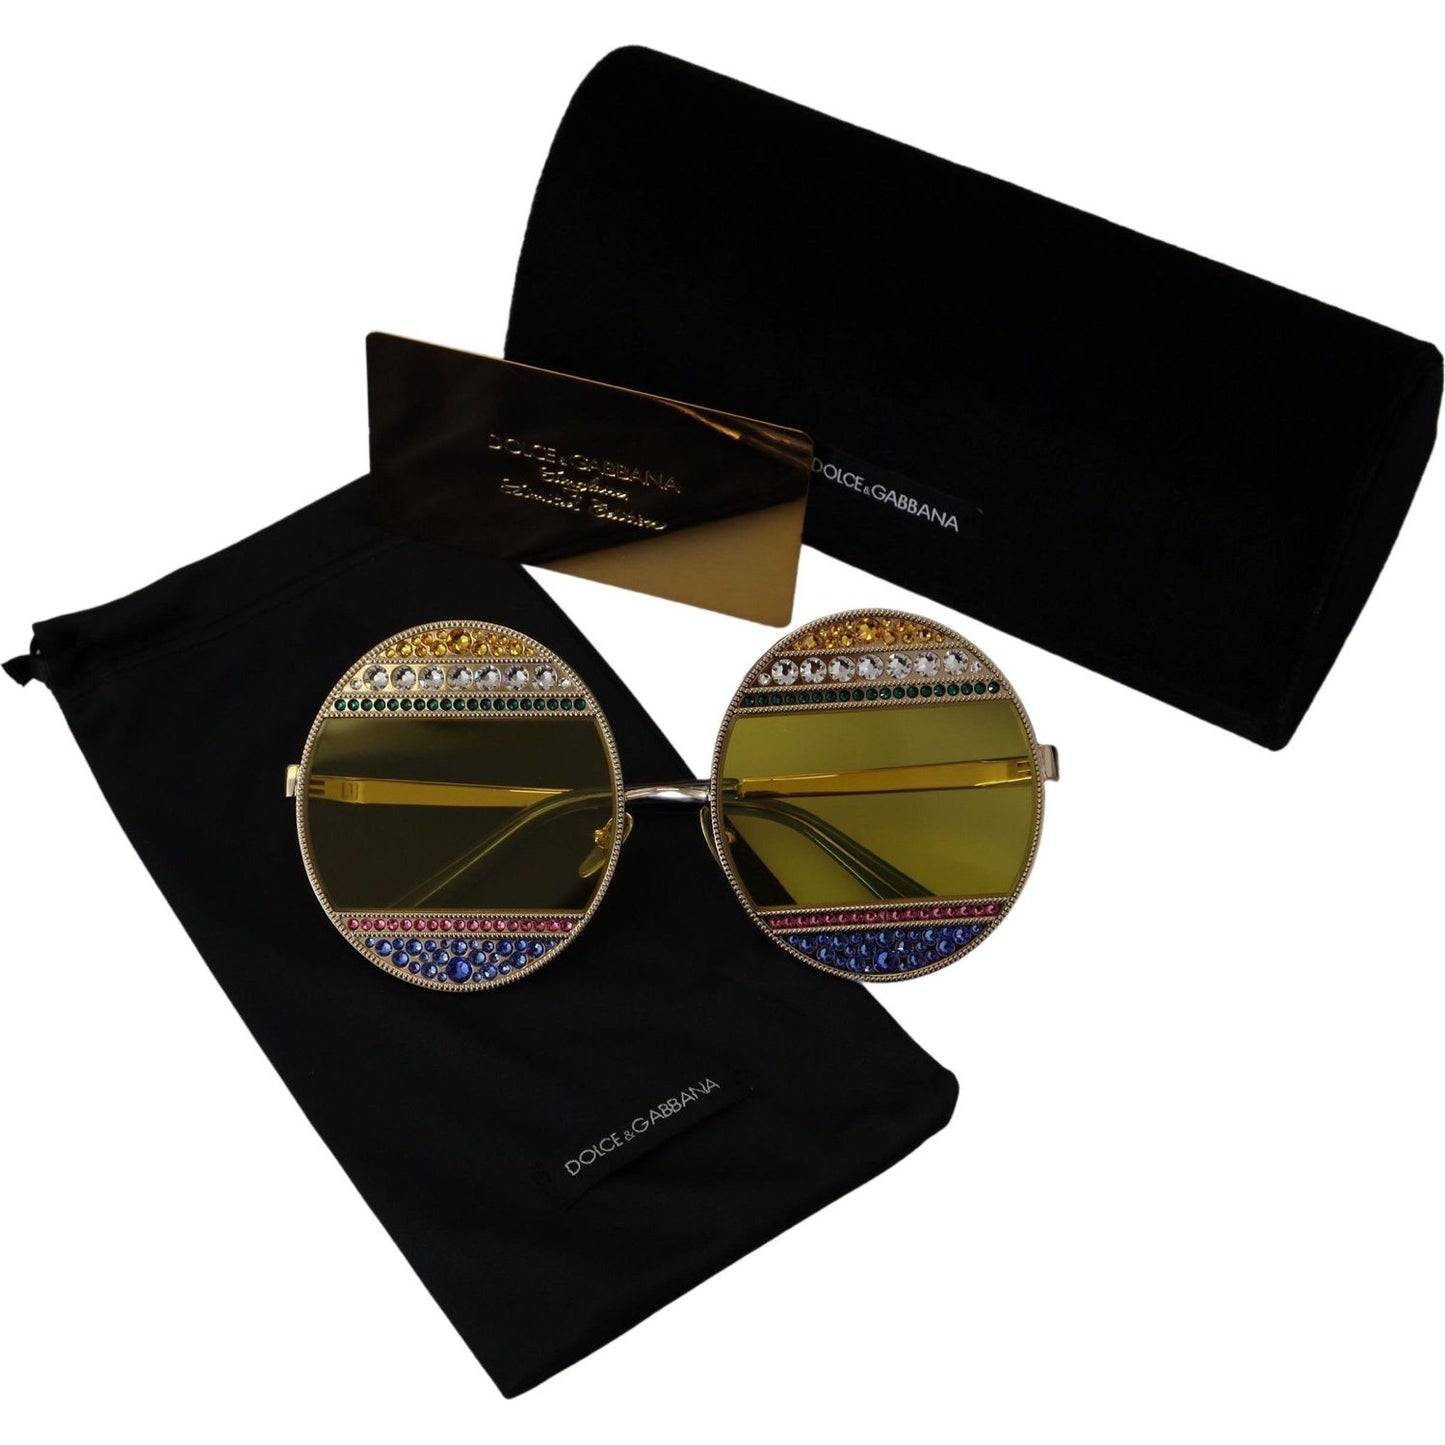 Dolce & Gabbana Crystal Embellished Gold Oval Sunglasses gold-oval-metal-crystals-shades-dg2209b-sunglasses IMG_5292-4f51241c-d72.jpg